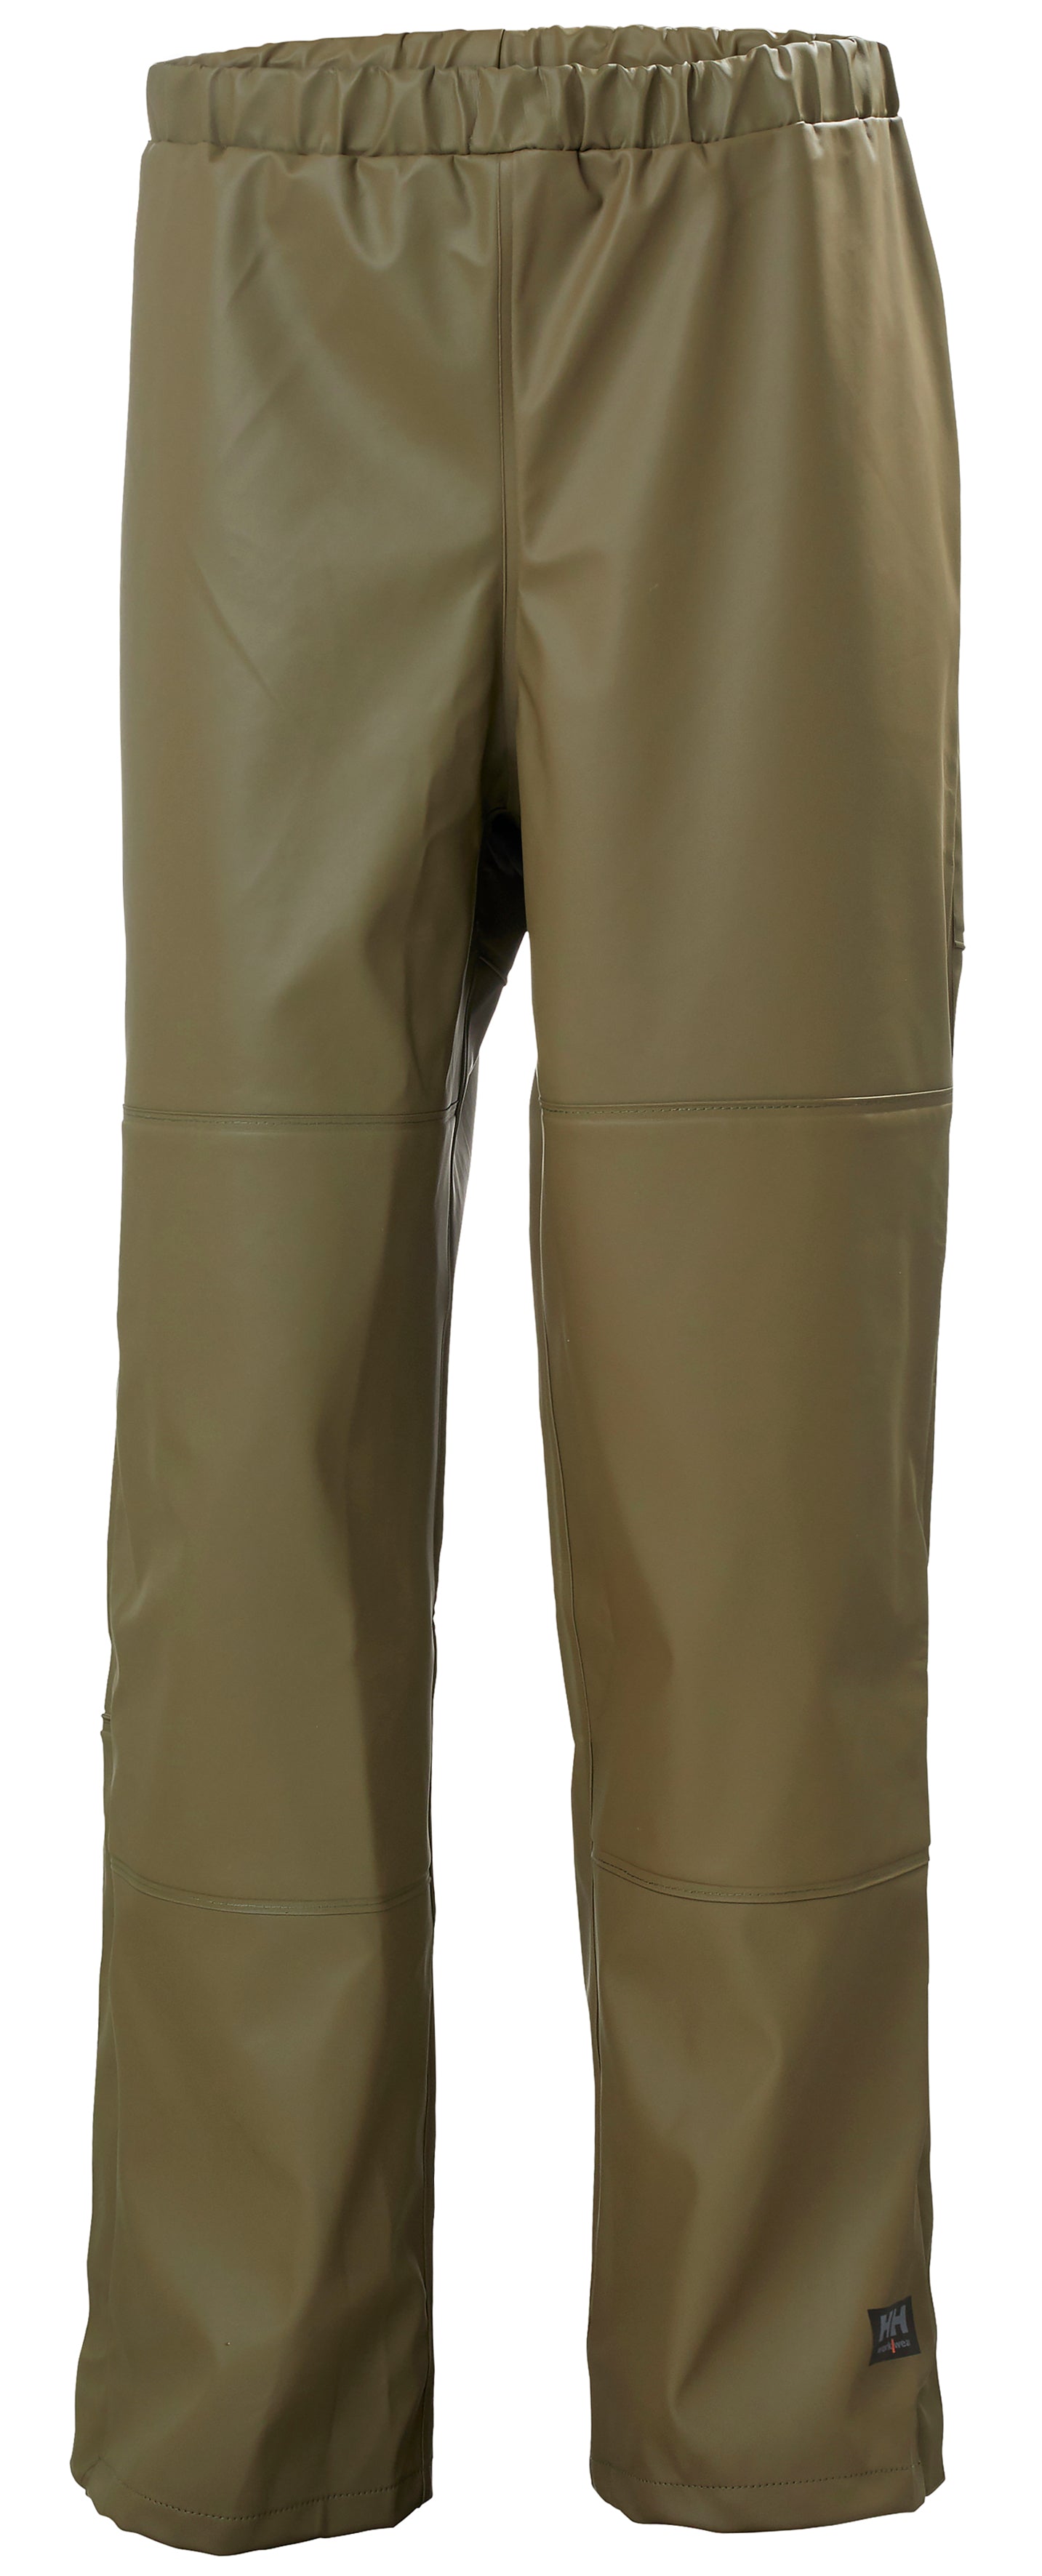 Helly Hansen Men's Impertech Reinforced Pant - Work World - Workwear, Work Boots, Safety Gear